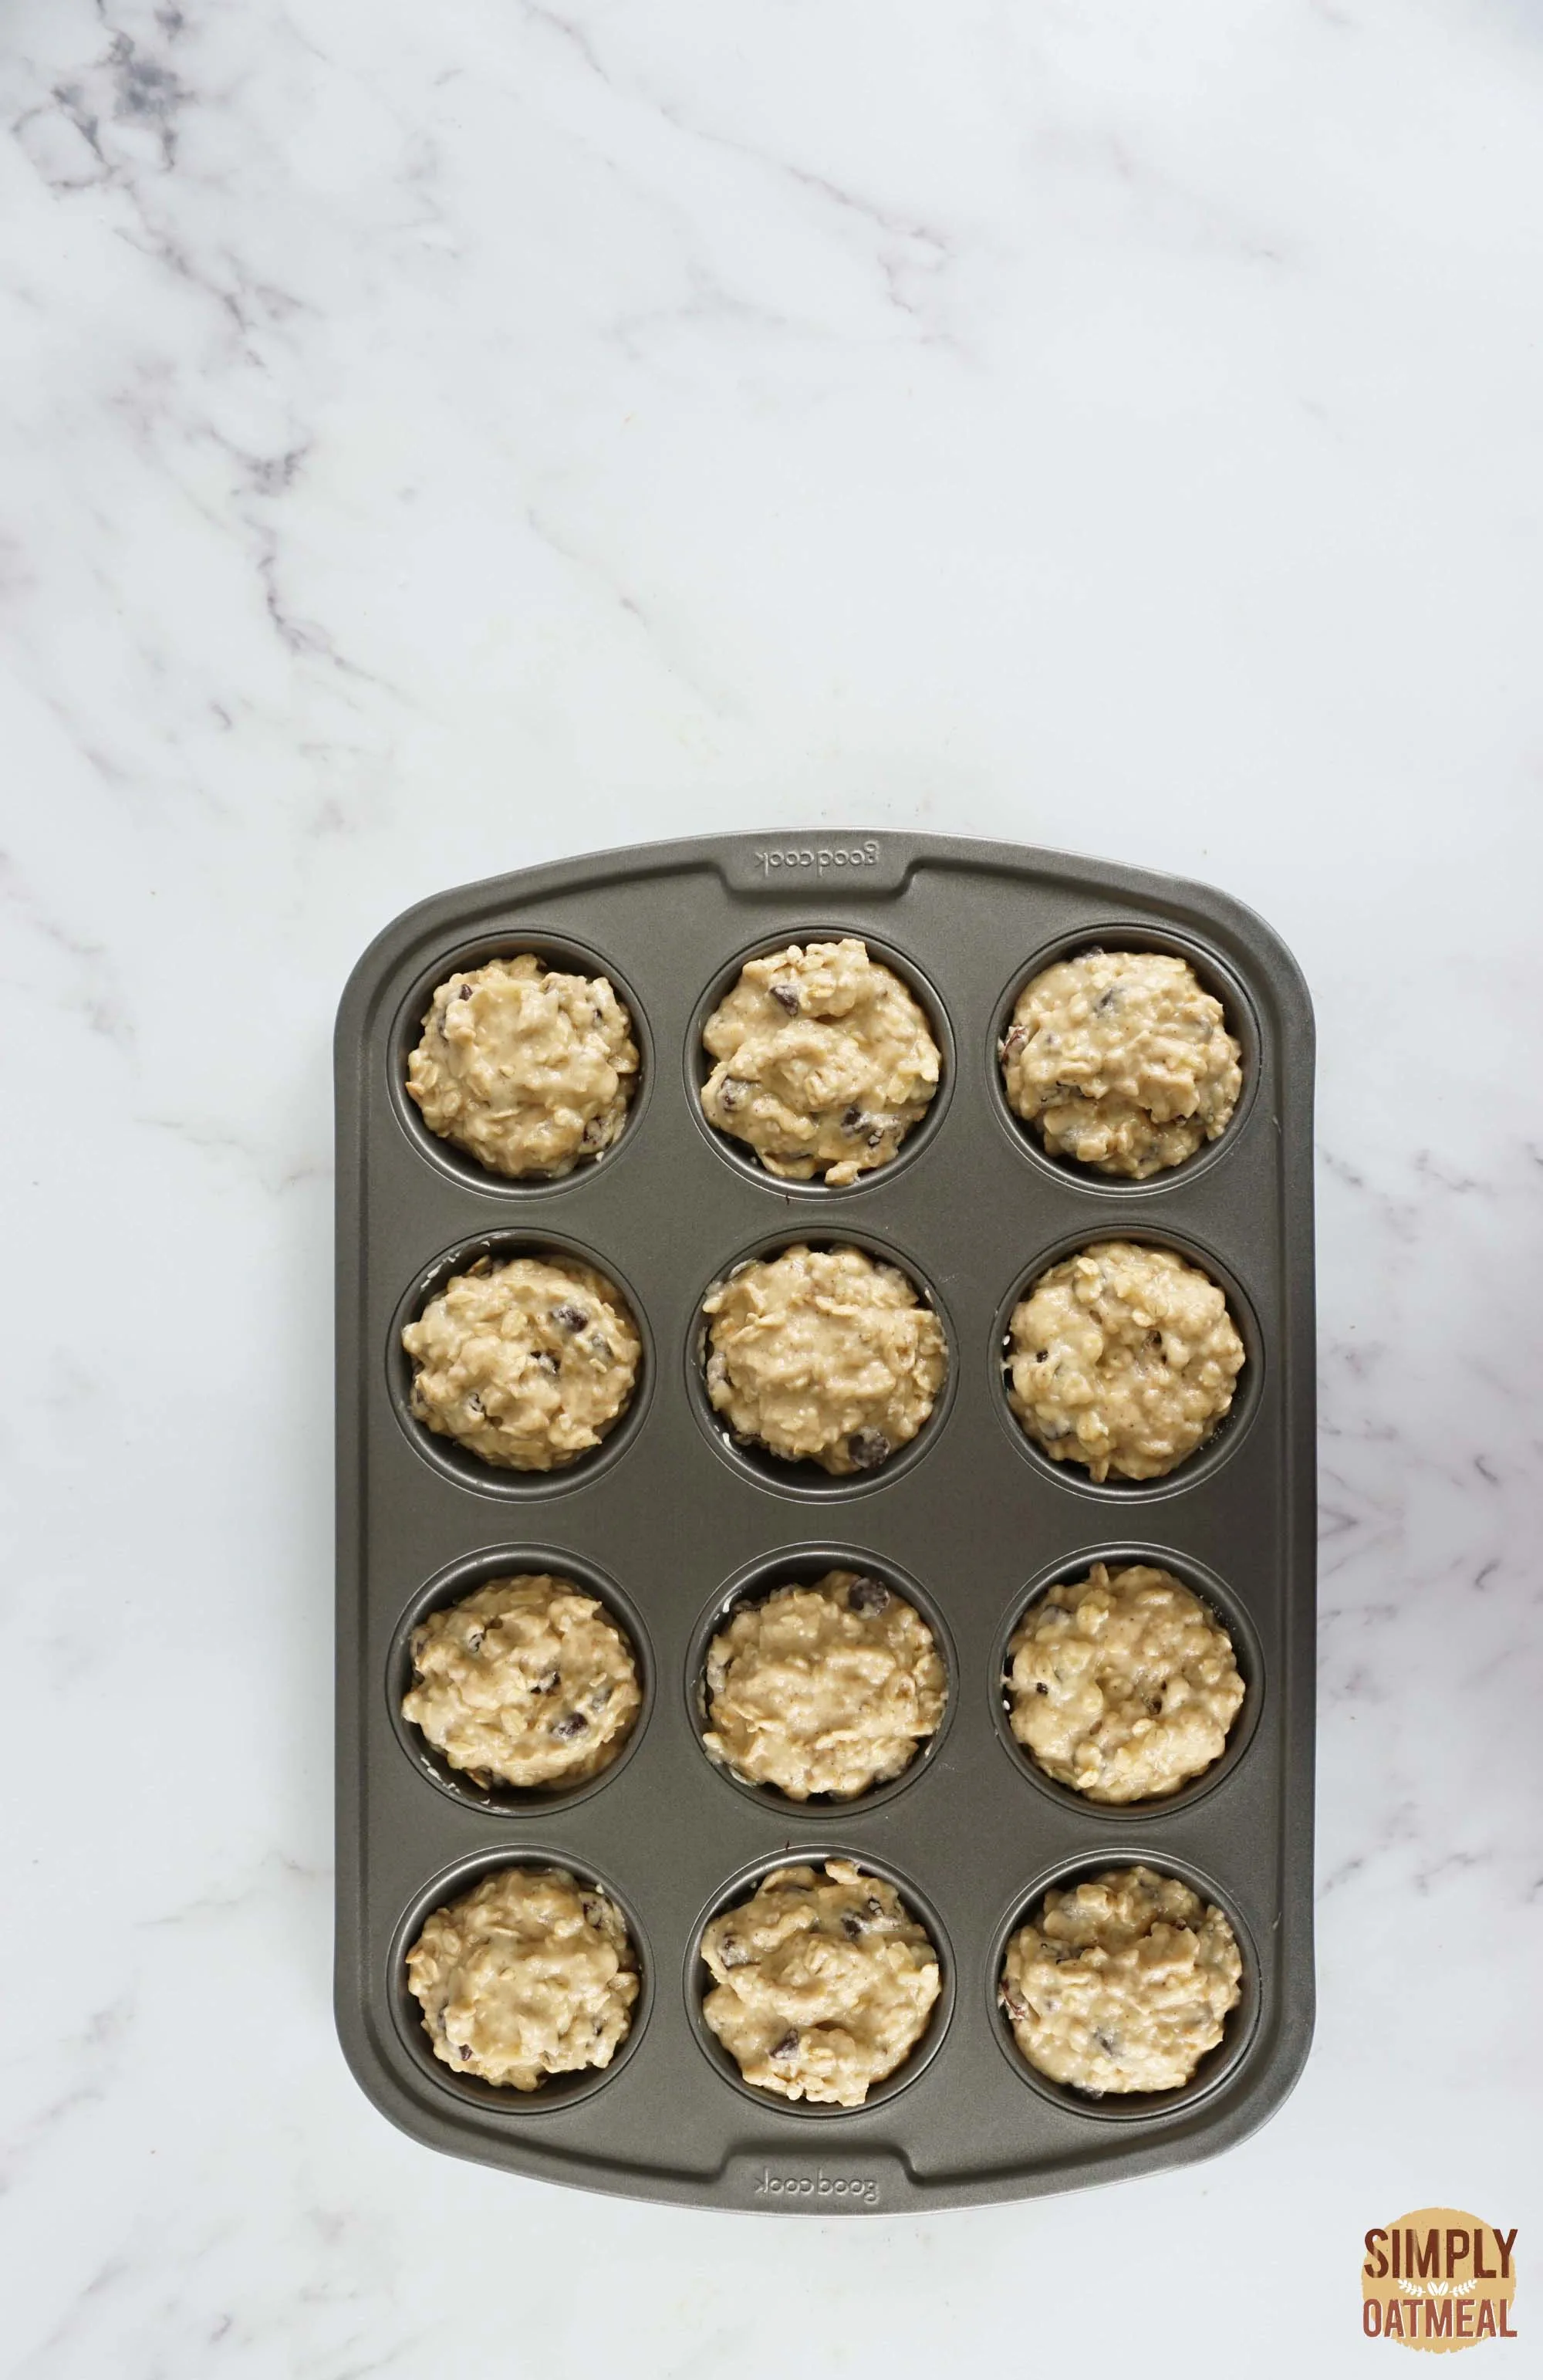 Applesauce oatmeal muffins batter in a prepared muffin pan